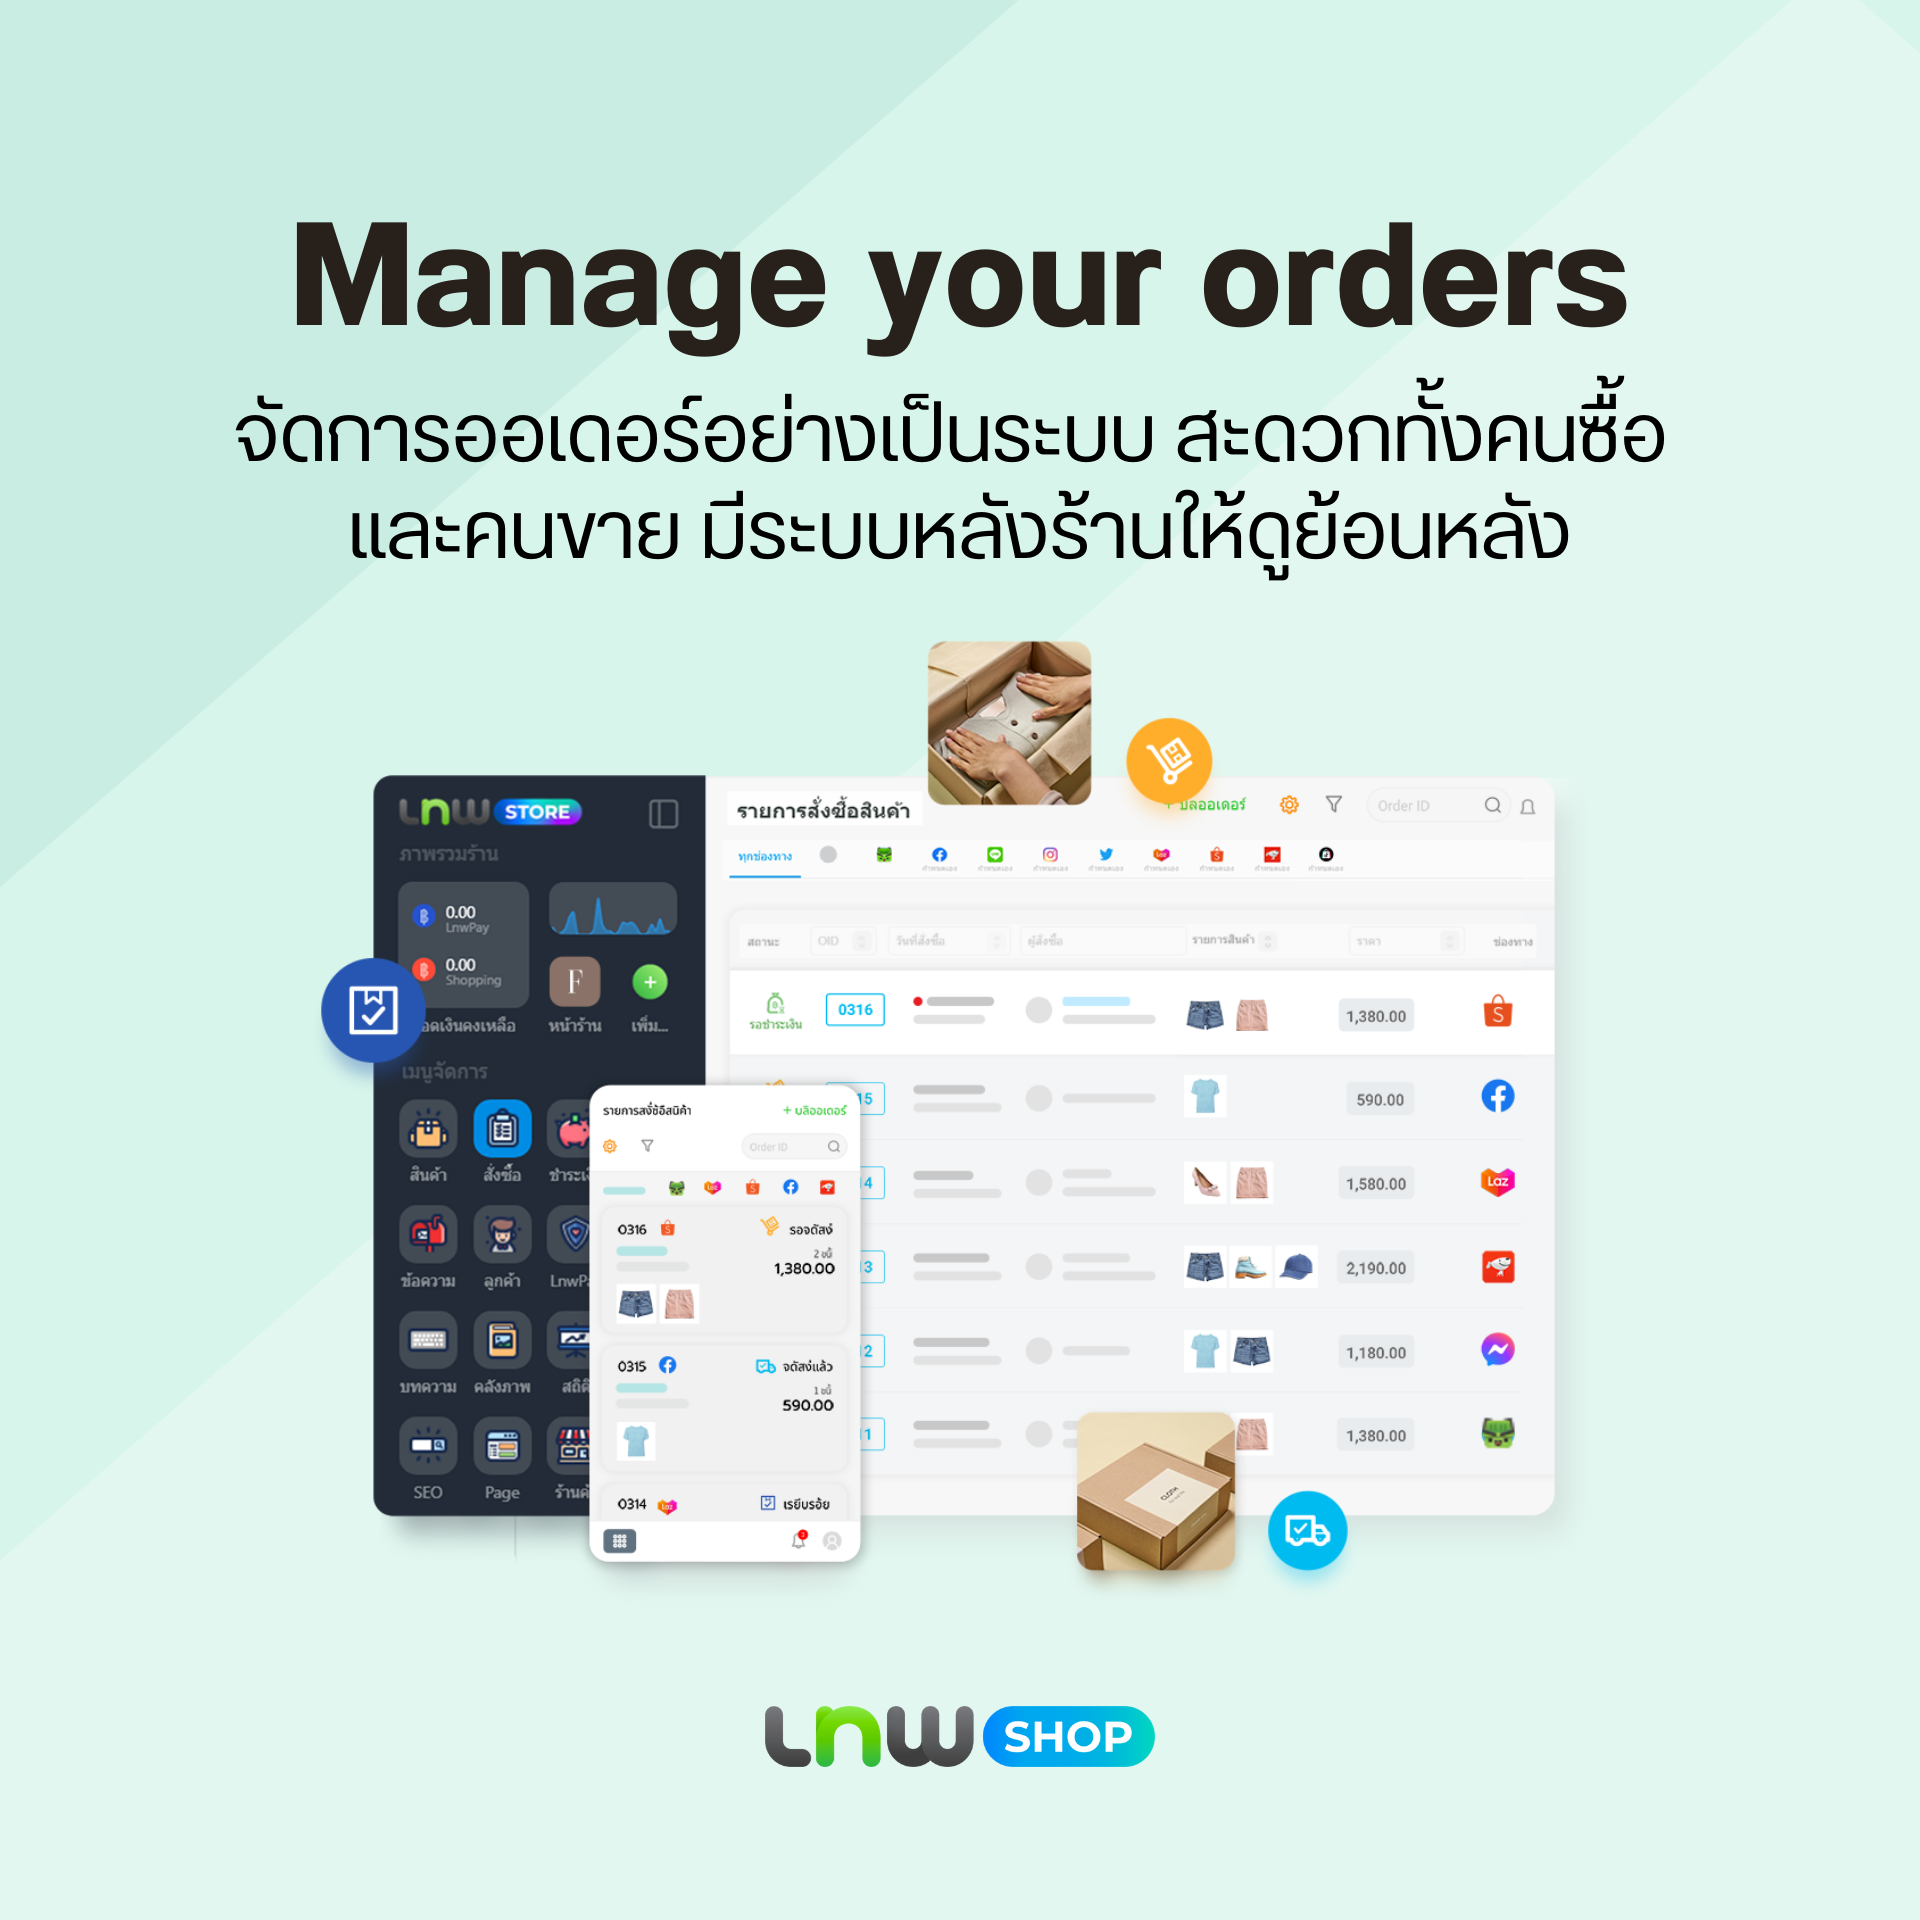 LnwShop Social - Manage Orders